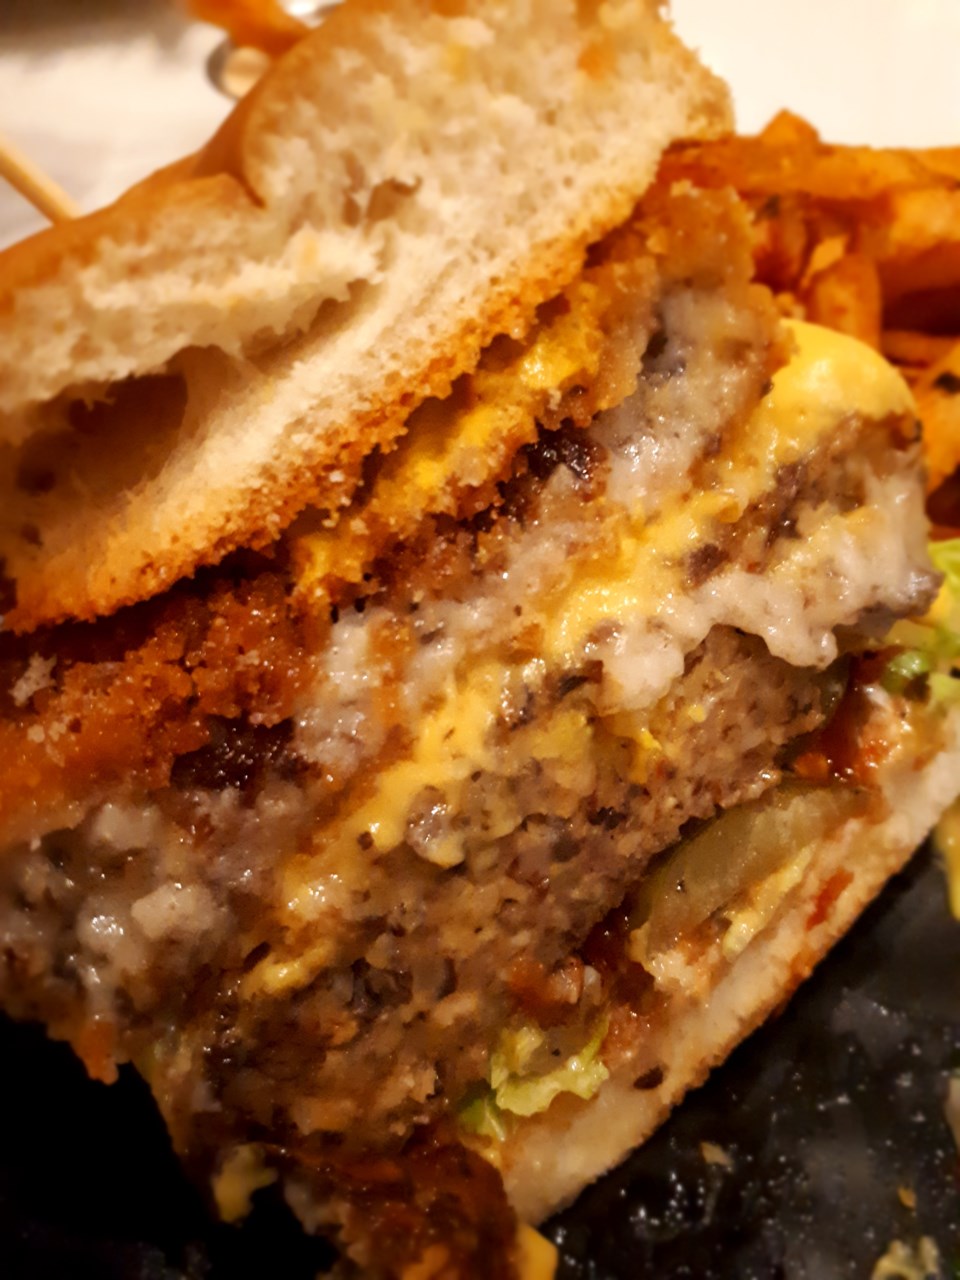 050719_HK-burger-column